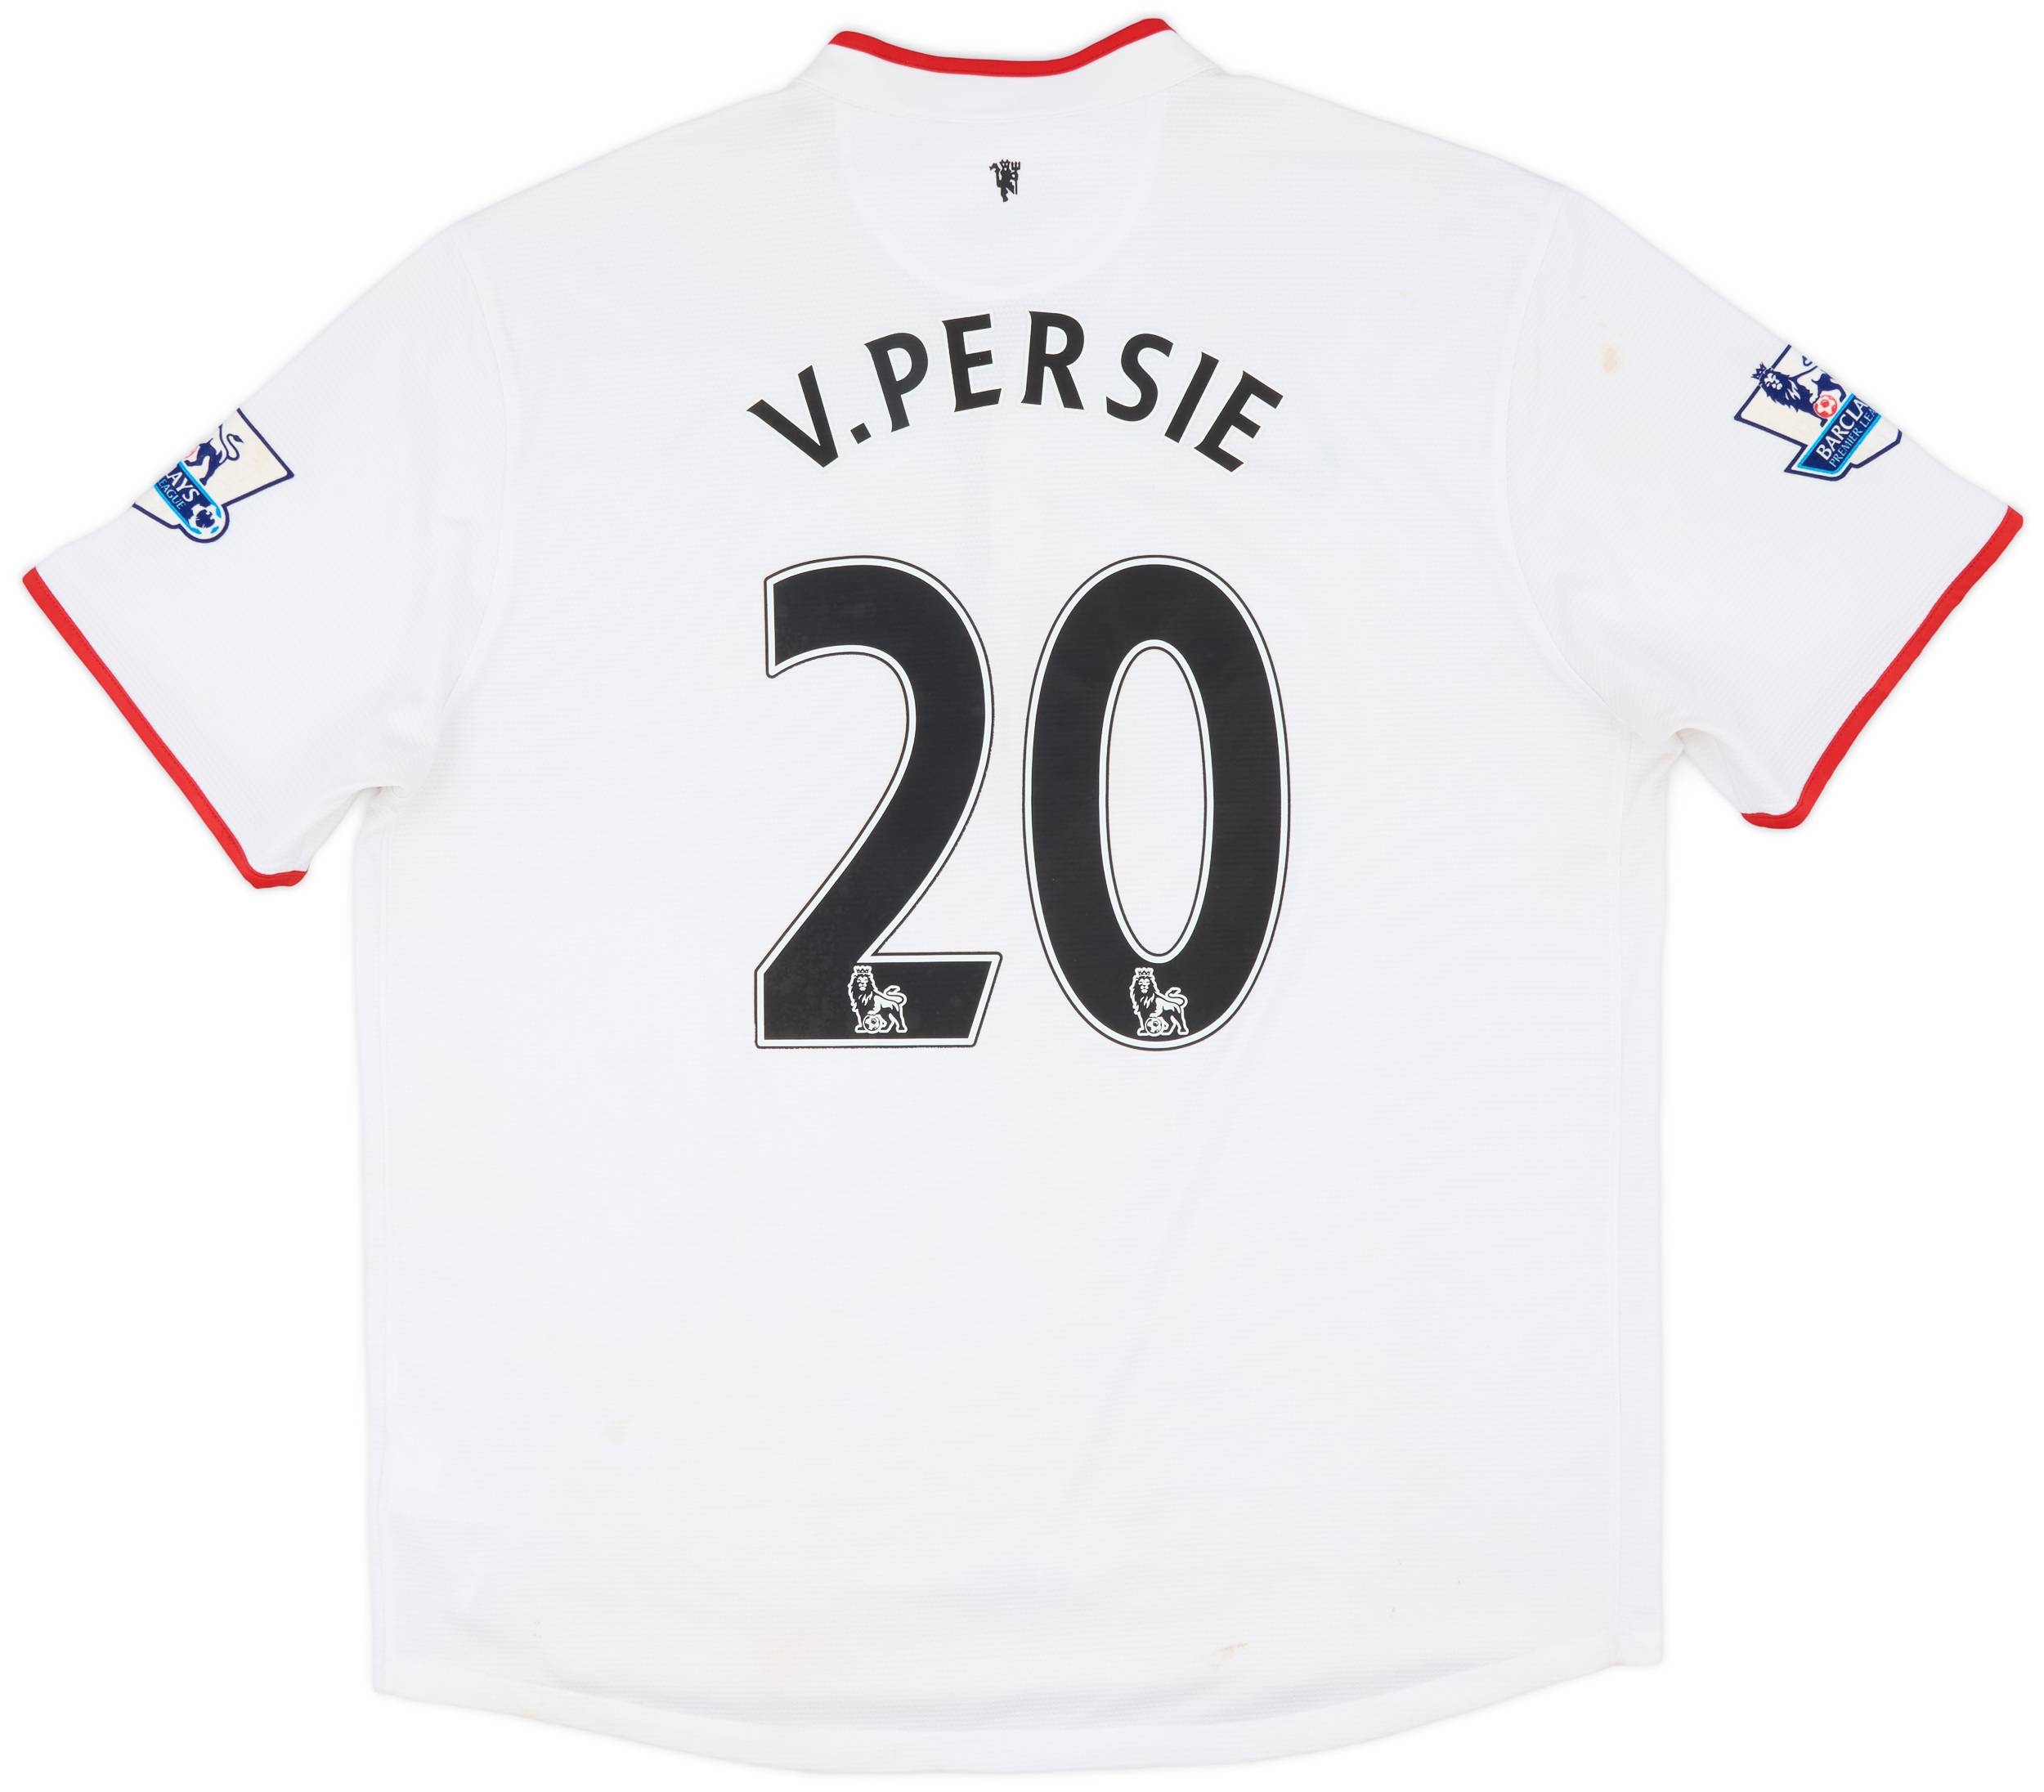 2012-14 Manchester United Away Shirt v.Persie #20 - 4/10 - (XL)